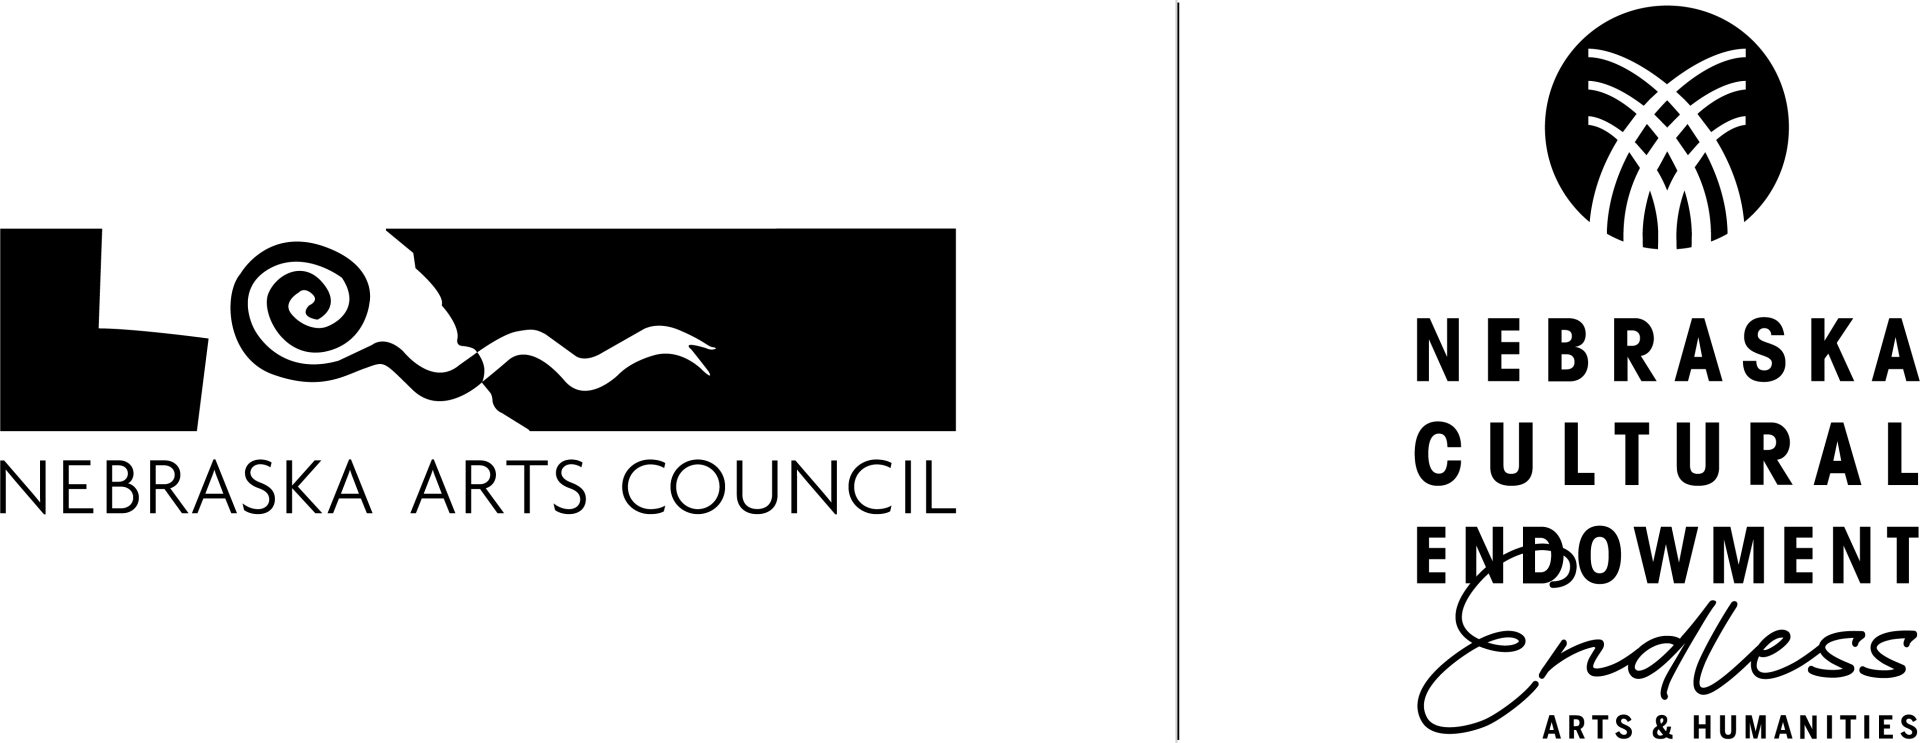 A black and white logo for the nebraska arts council